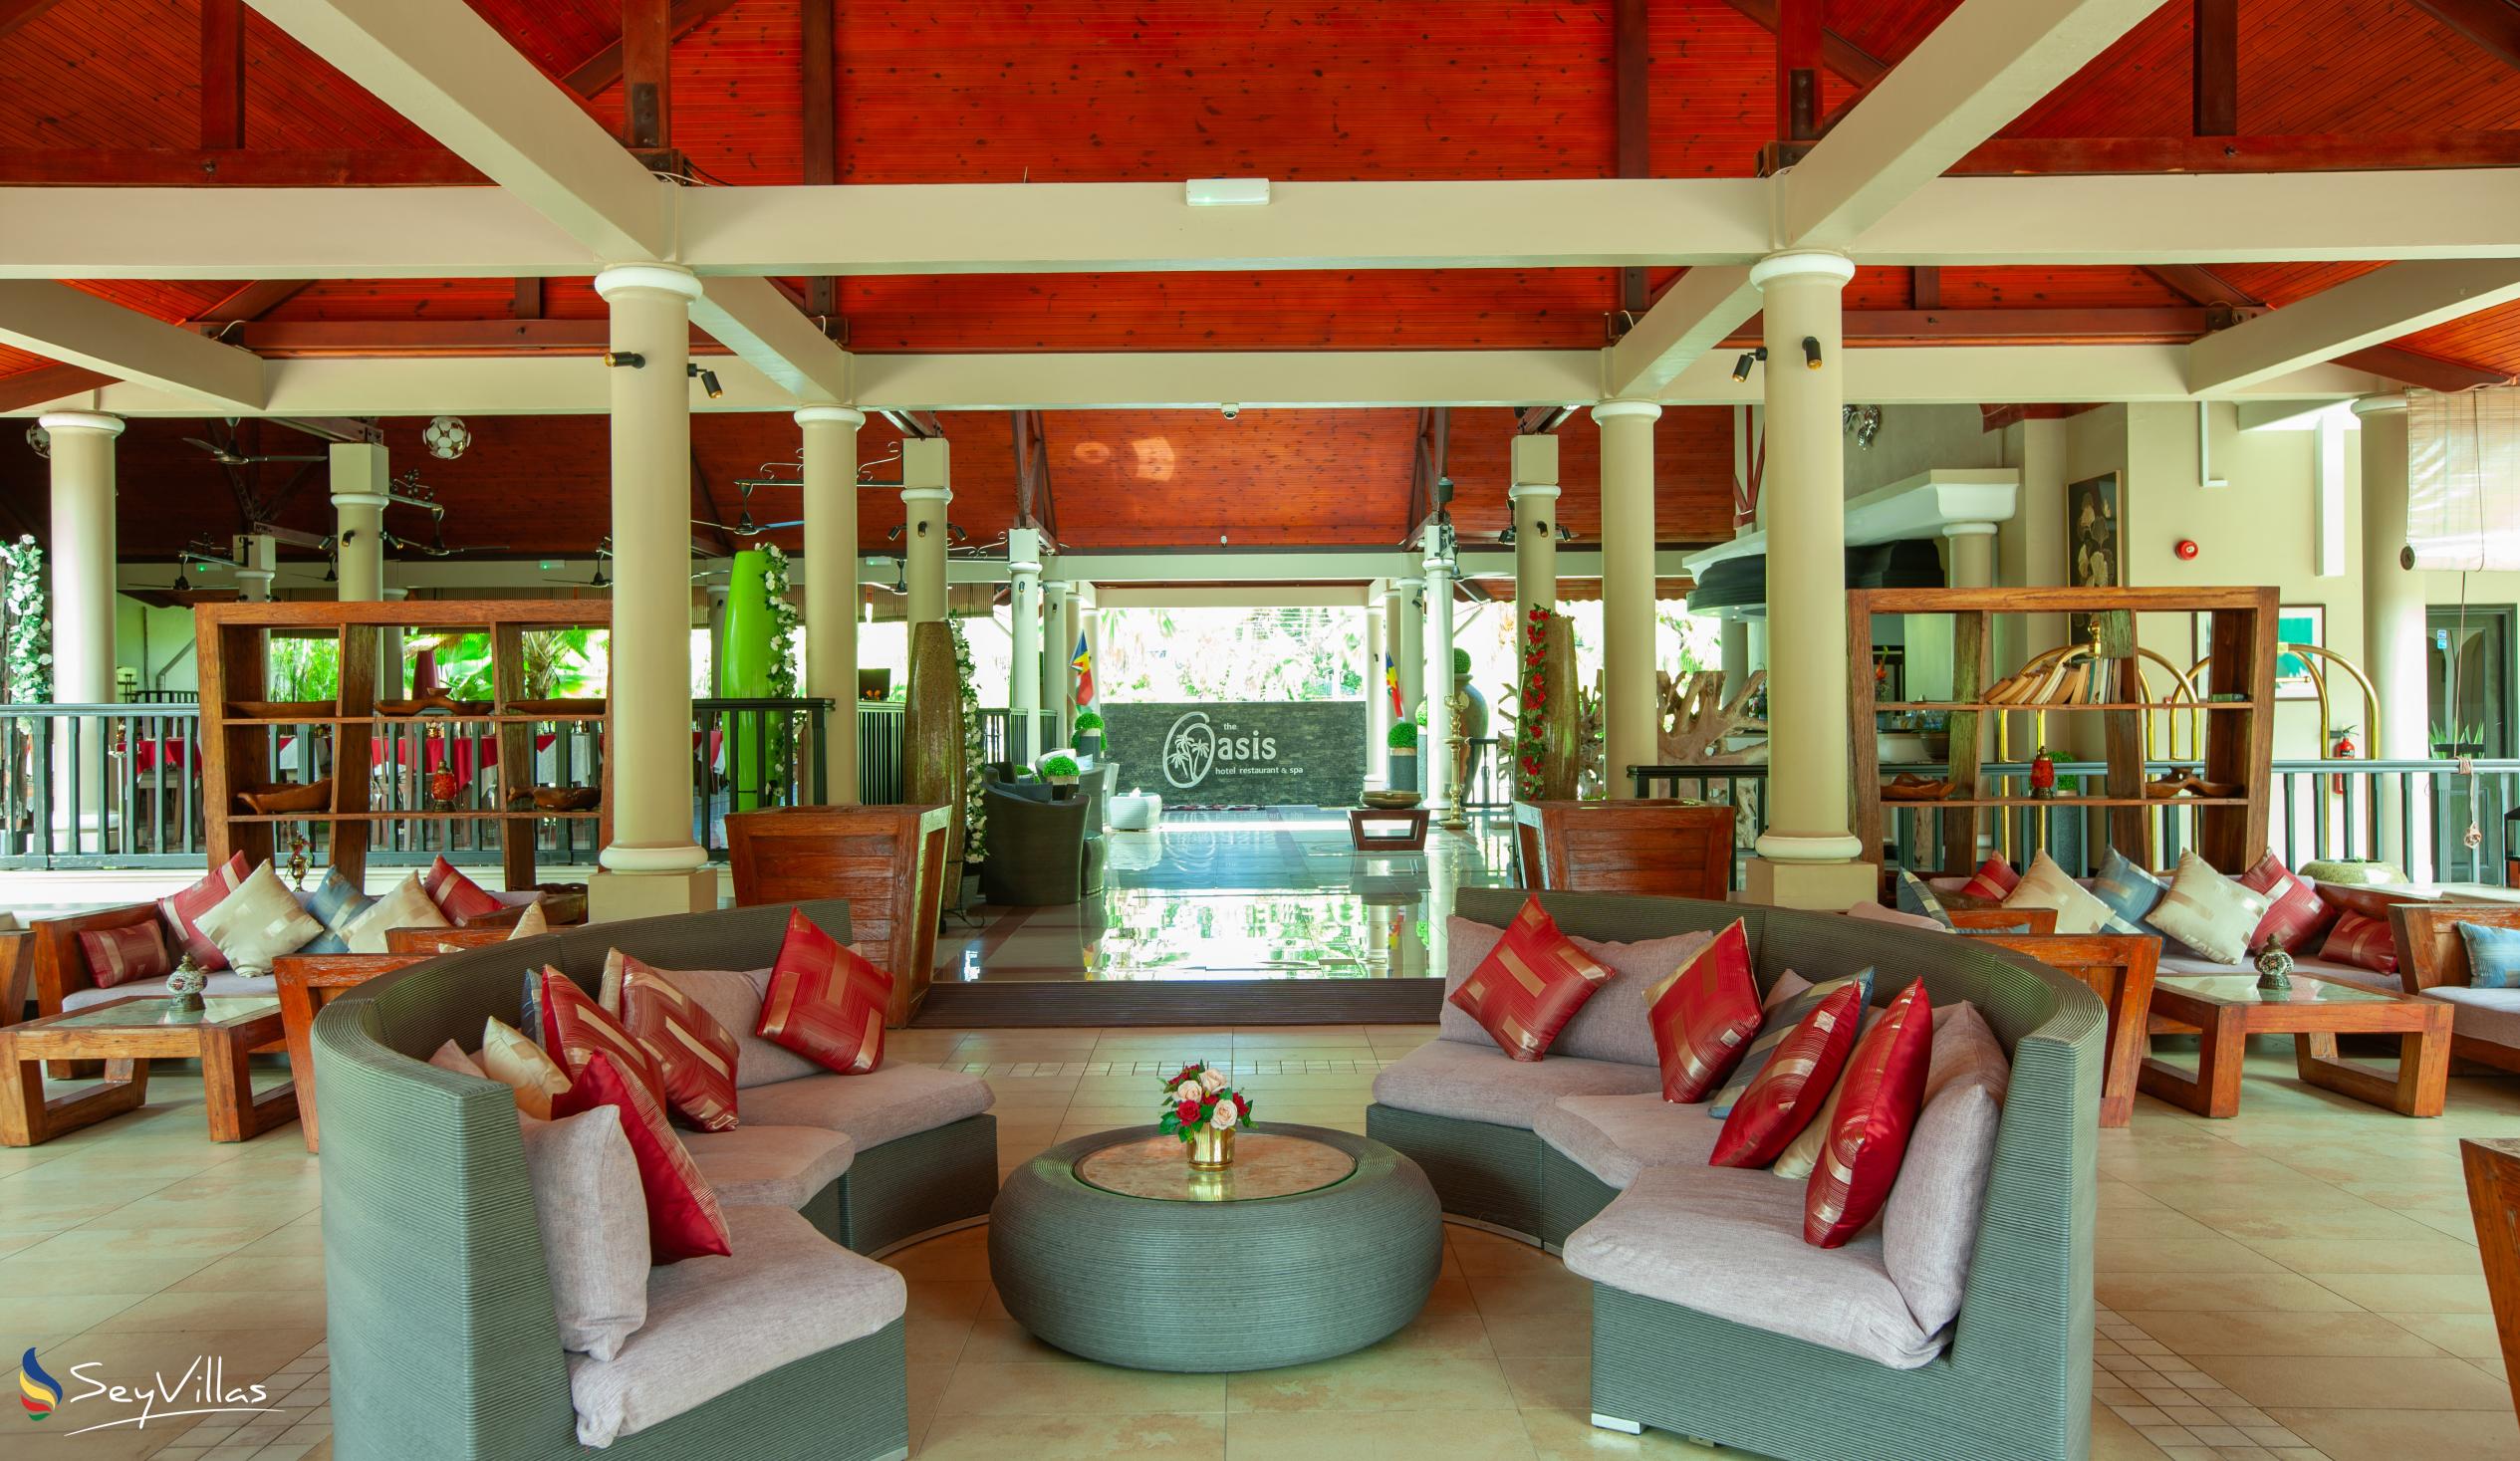 Foto 17: Oasis Hotel, Restaurant & Spa - Interno - Praslin (Seychelles)